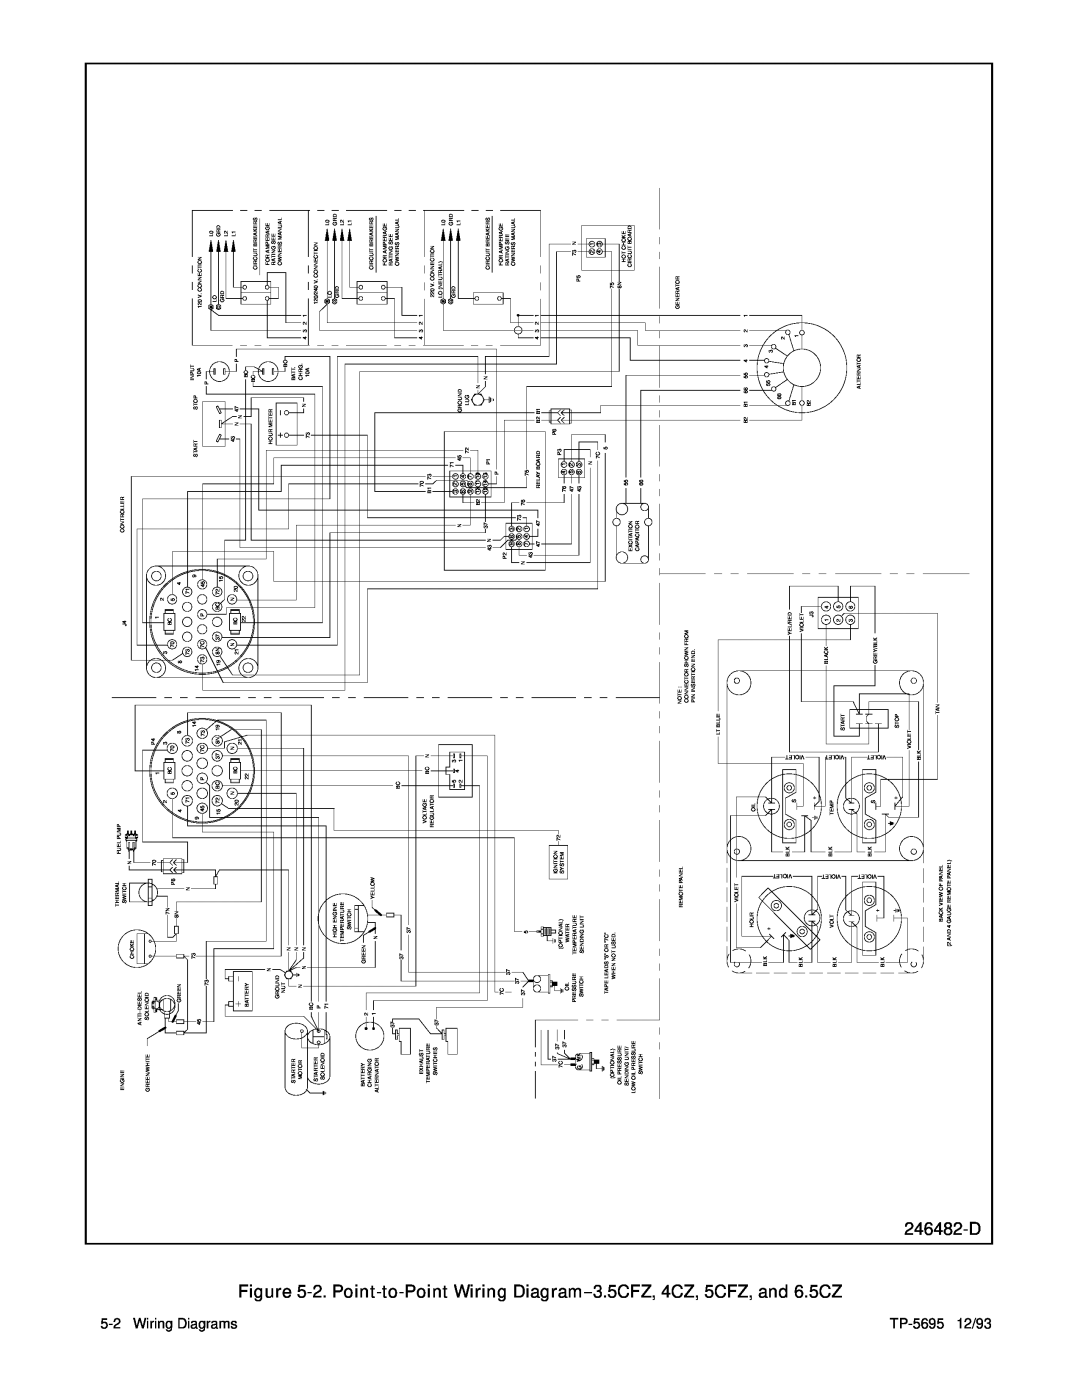 Kohler 3.5CFZ, 4CZ, 5CFZ, 6.5CZ installation manual Point, Wiring, Diagrams, TP-5695 12/93 